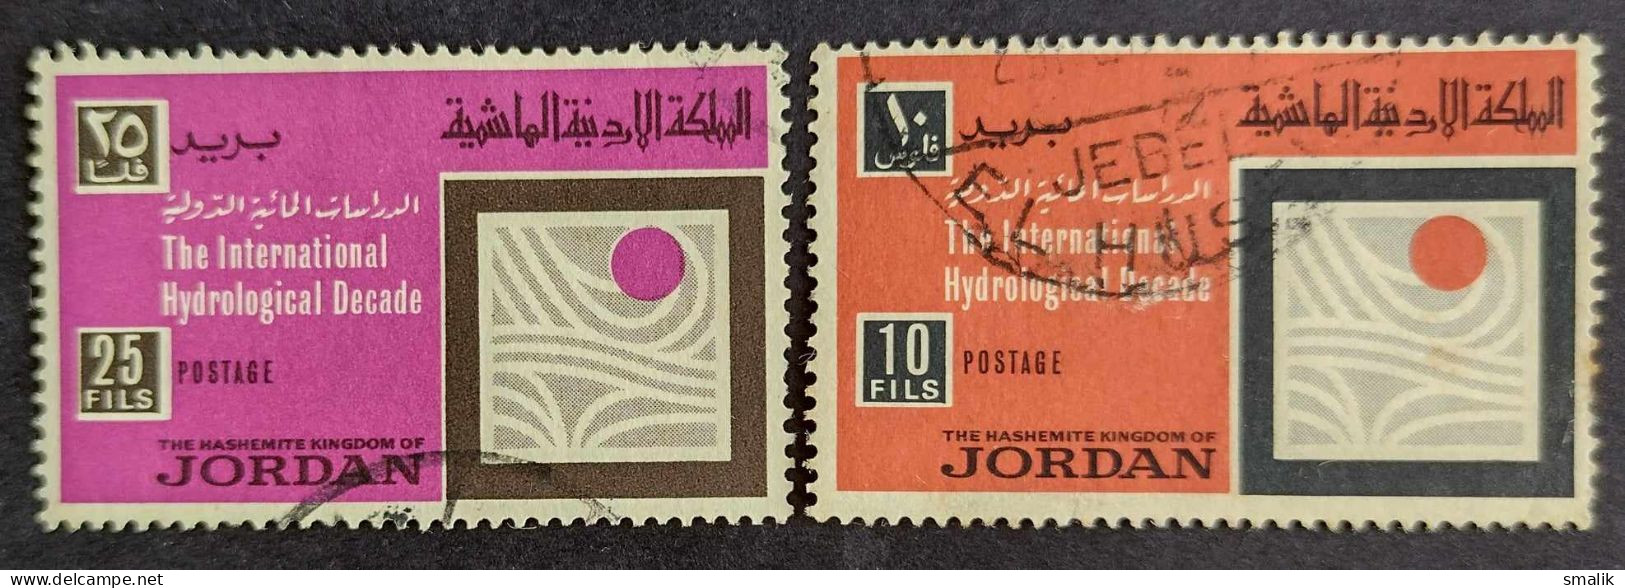 JORDAN 1967 - UNESCO, The International Hydrological Decade, 2 Stamps, Fine Used - Jordanien